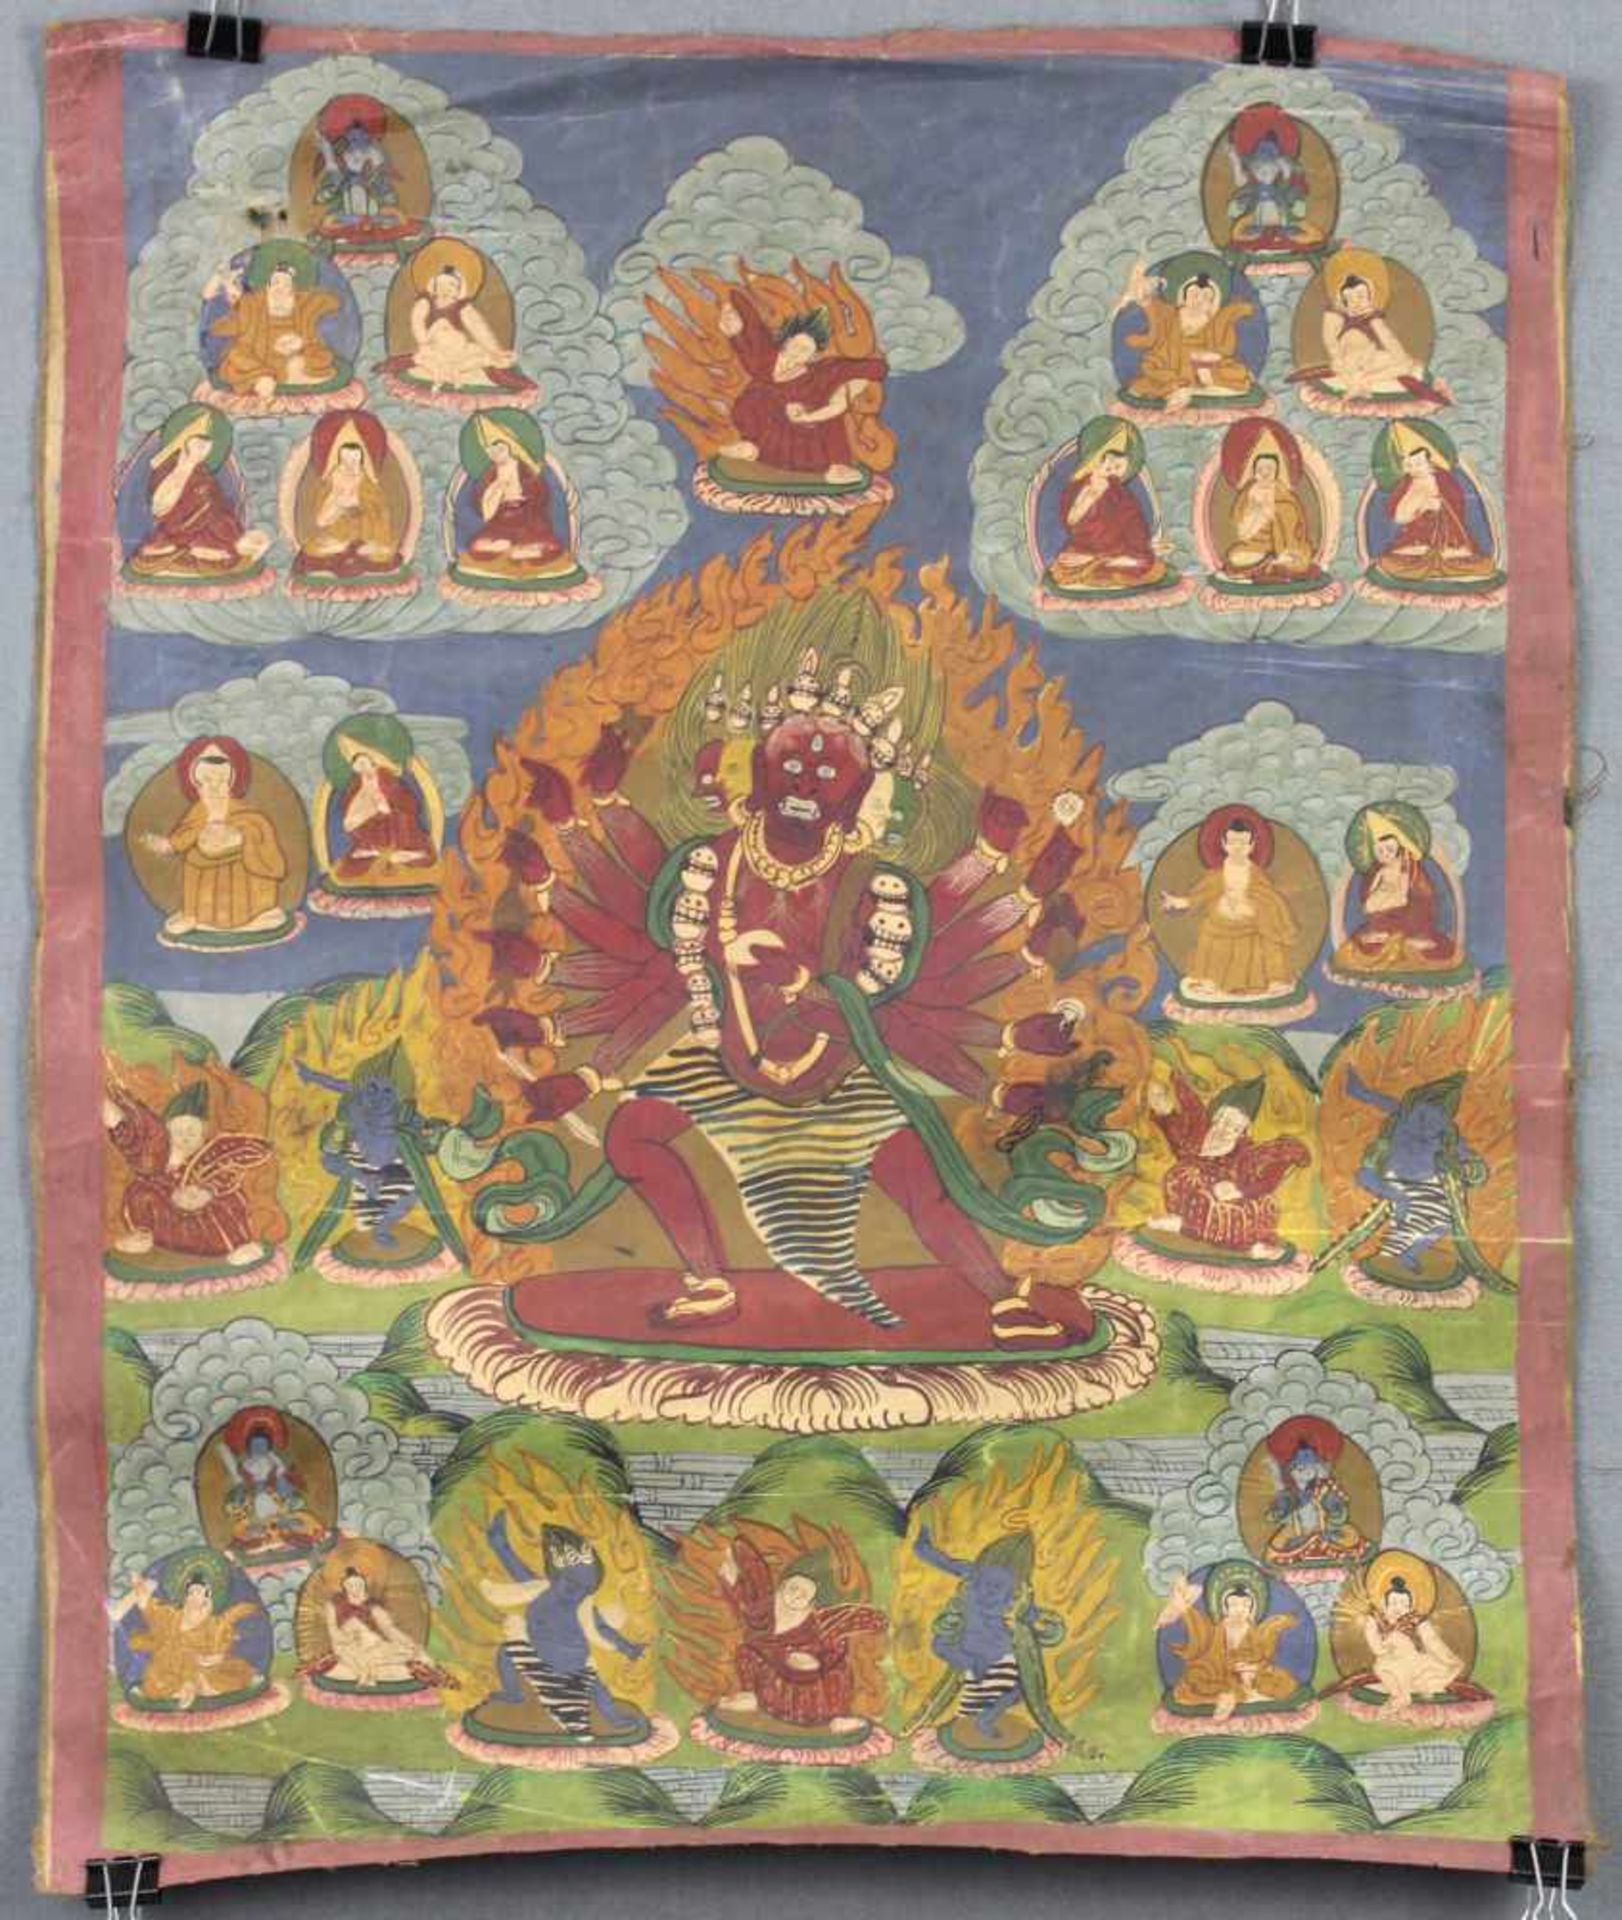 Cri Chakrasamvara ? Thangka, China / Tibet alt.50 cm x 40 cm. Gemälde.Cri Chakrasamvara ? Thangka,